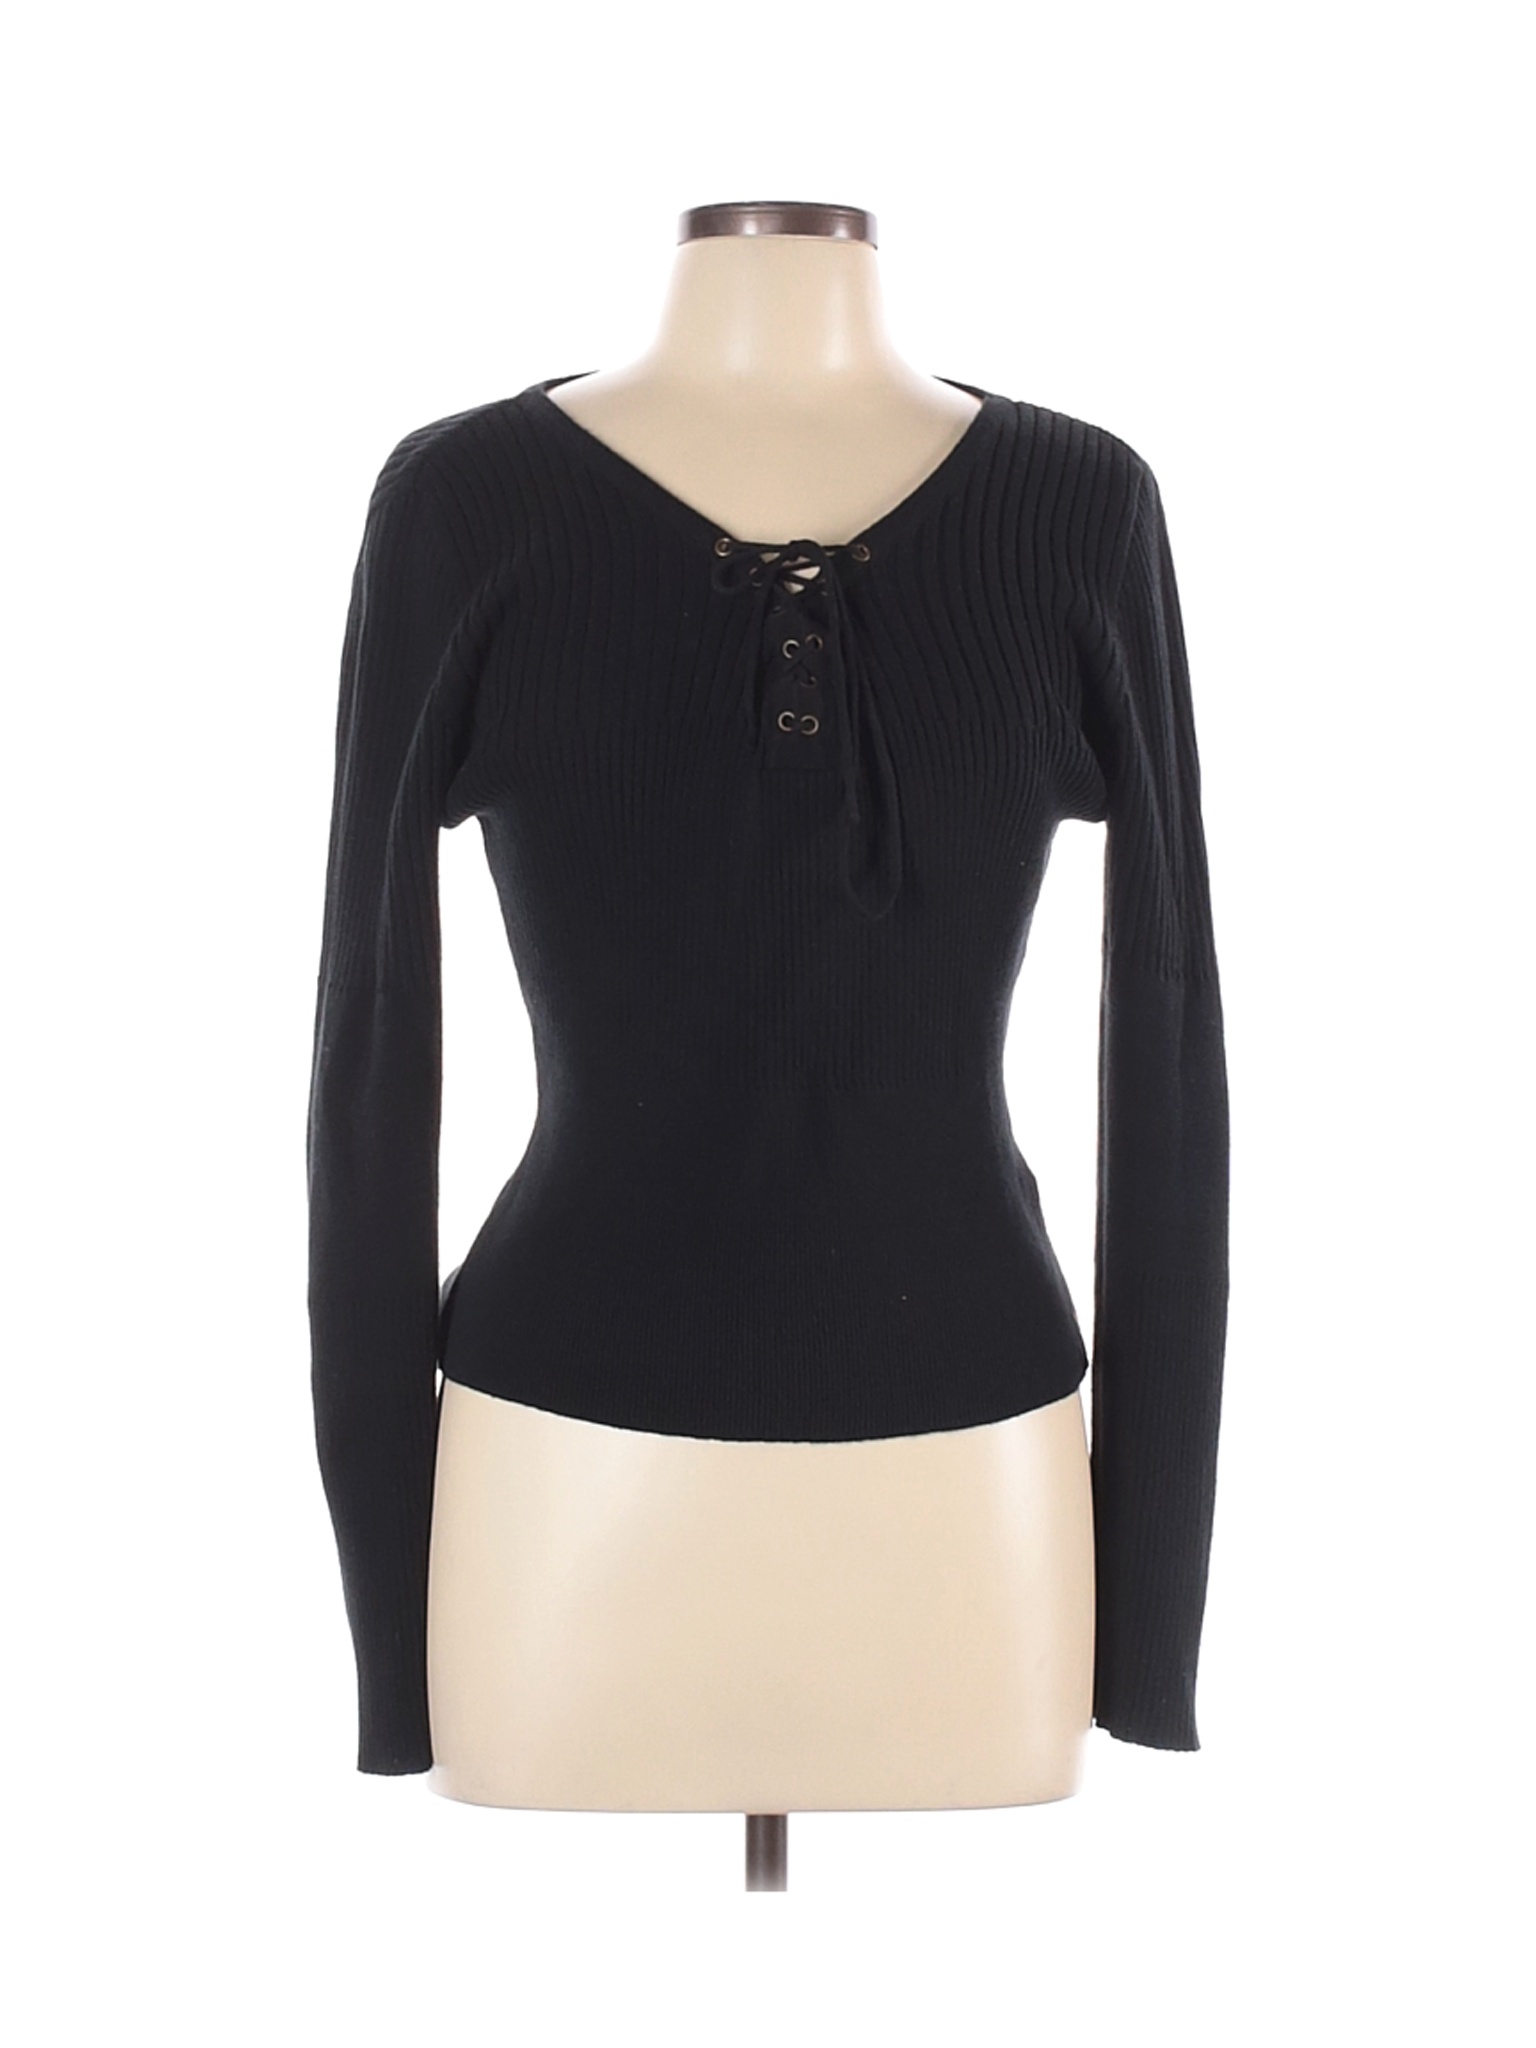 XX by Mexx Women Black Pullover Sweater L | eBay